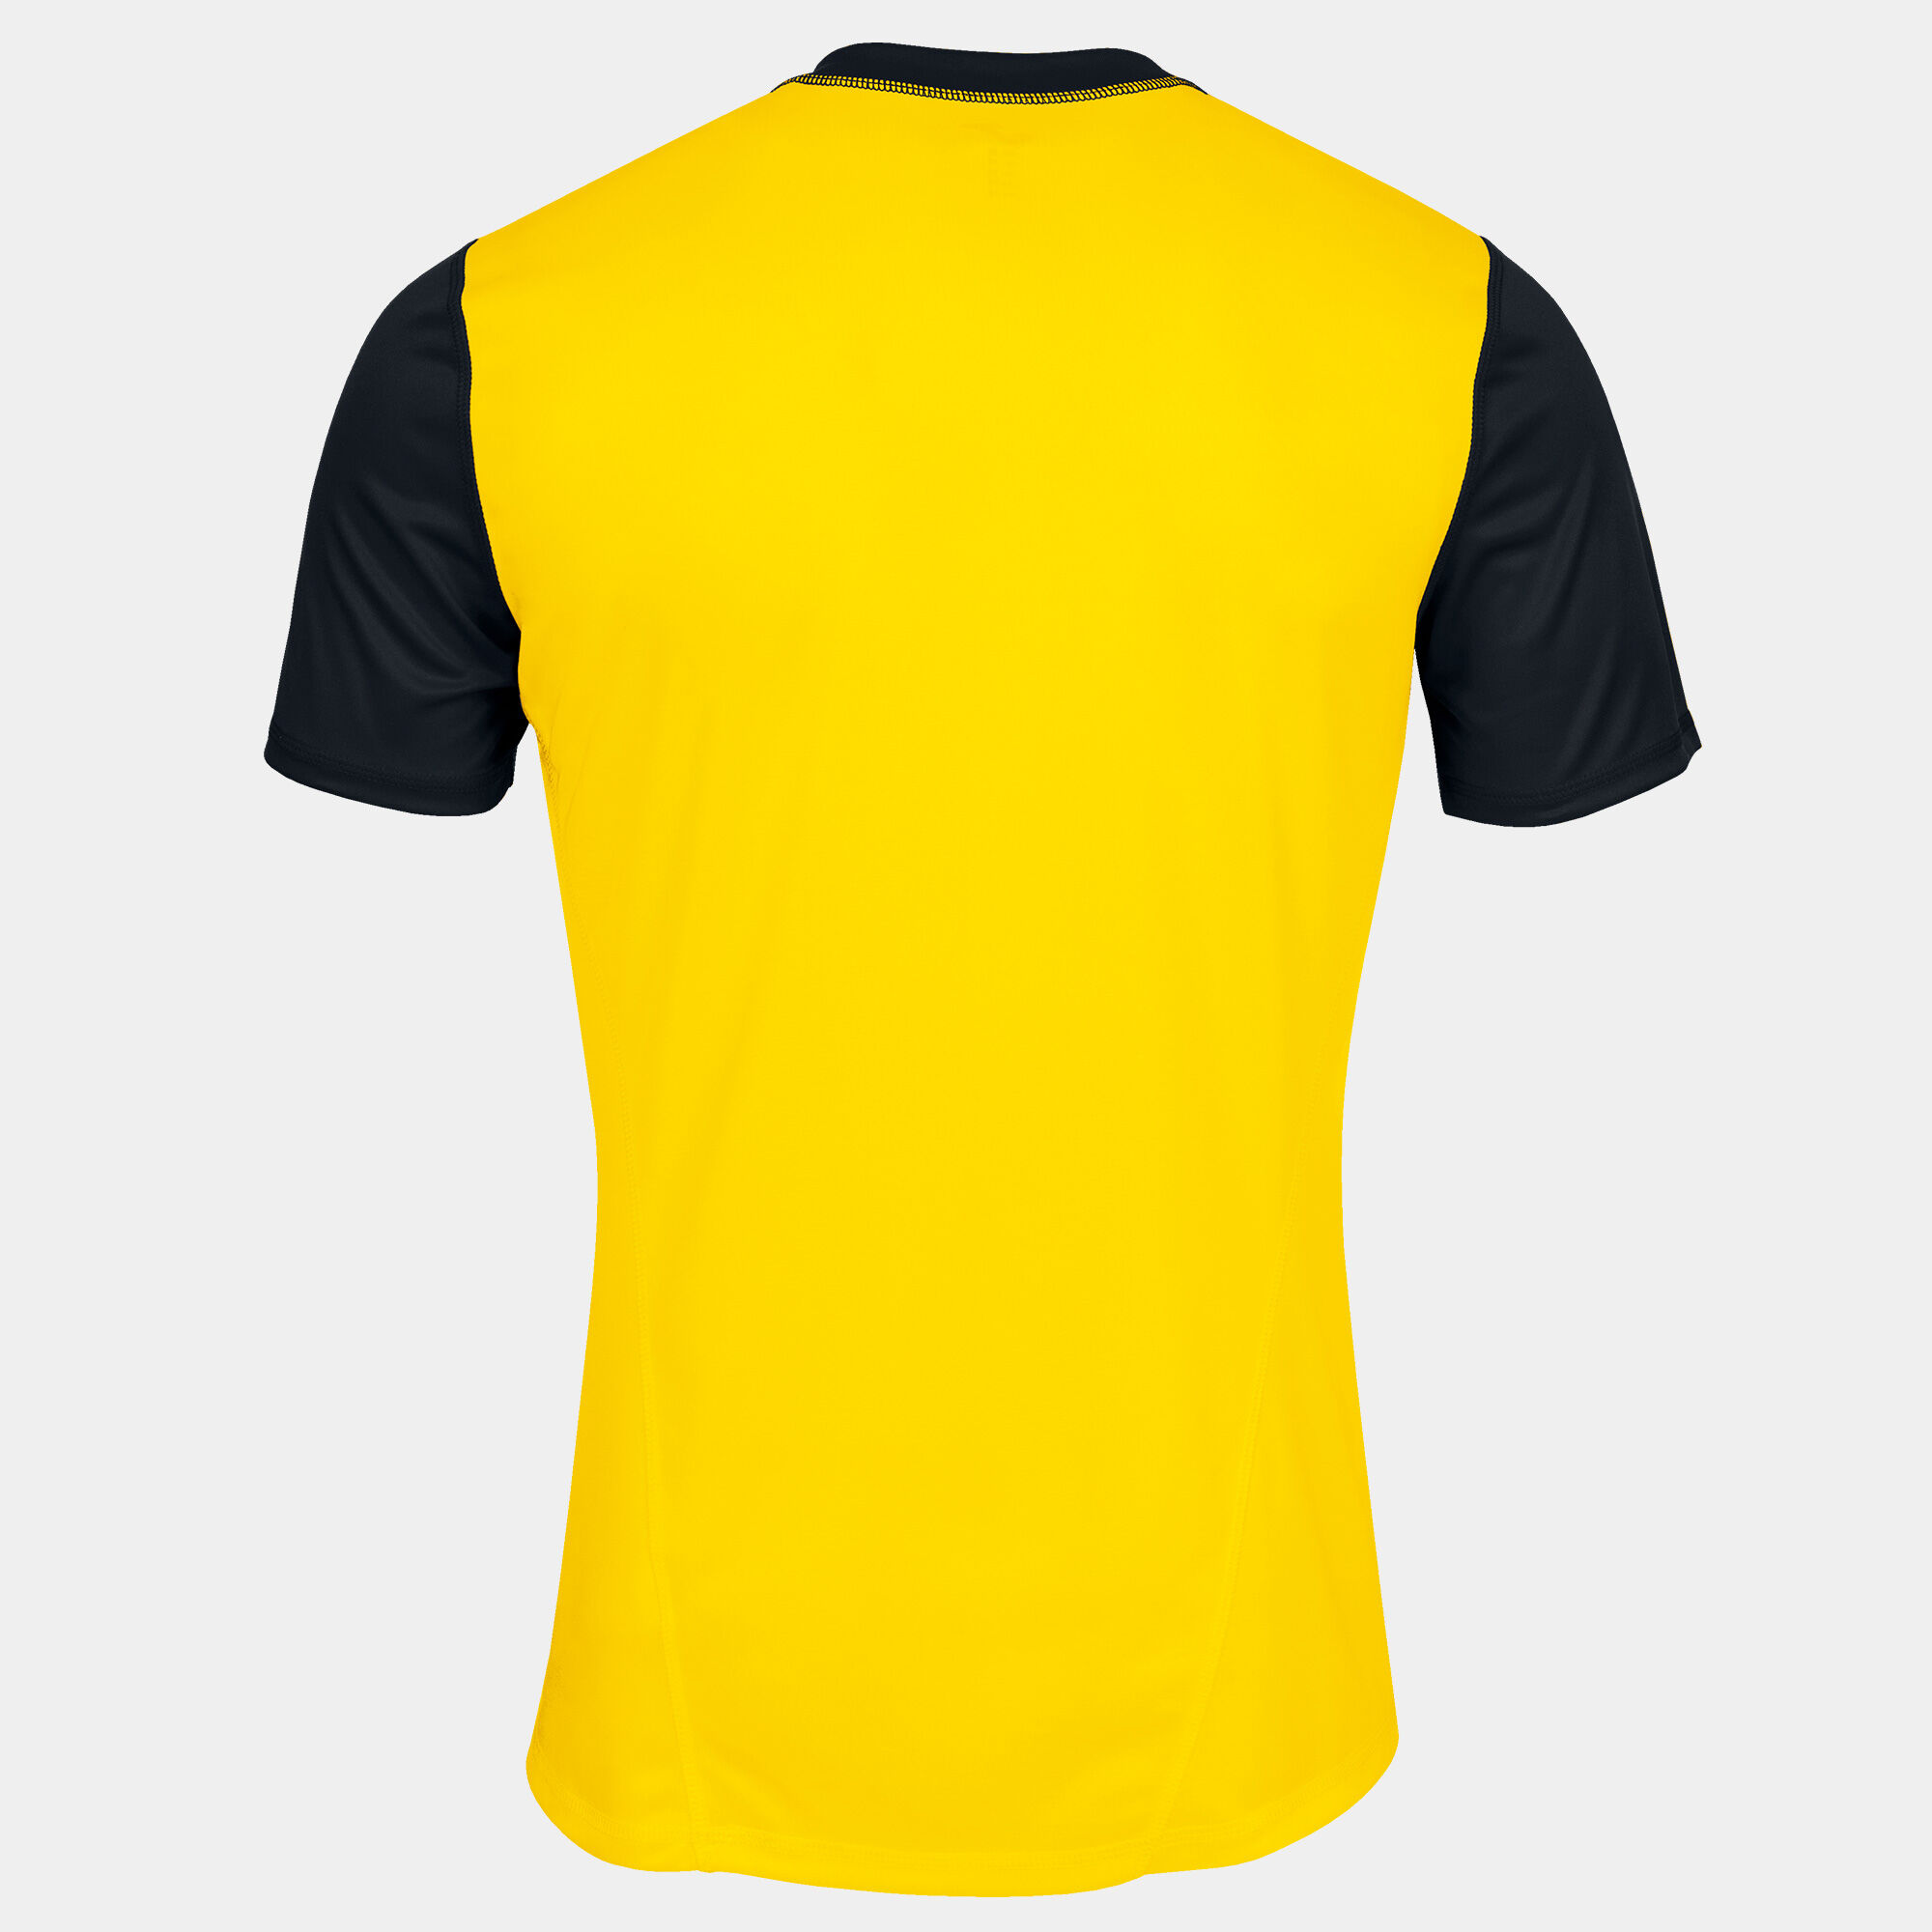 Camiseta manga corta hombre Hispa IV amarillo negro